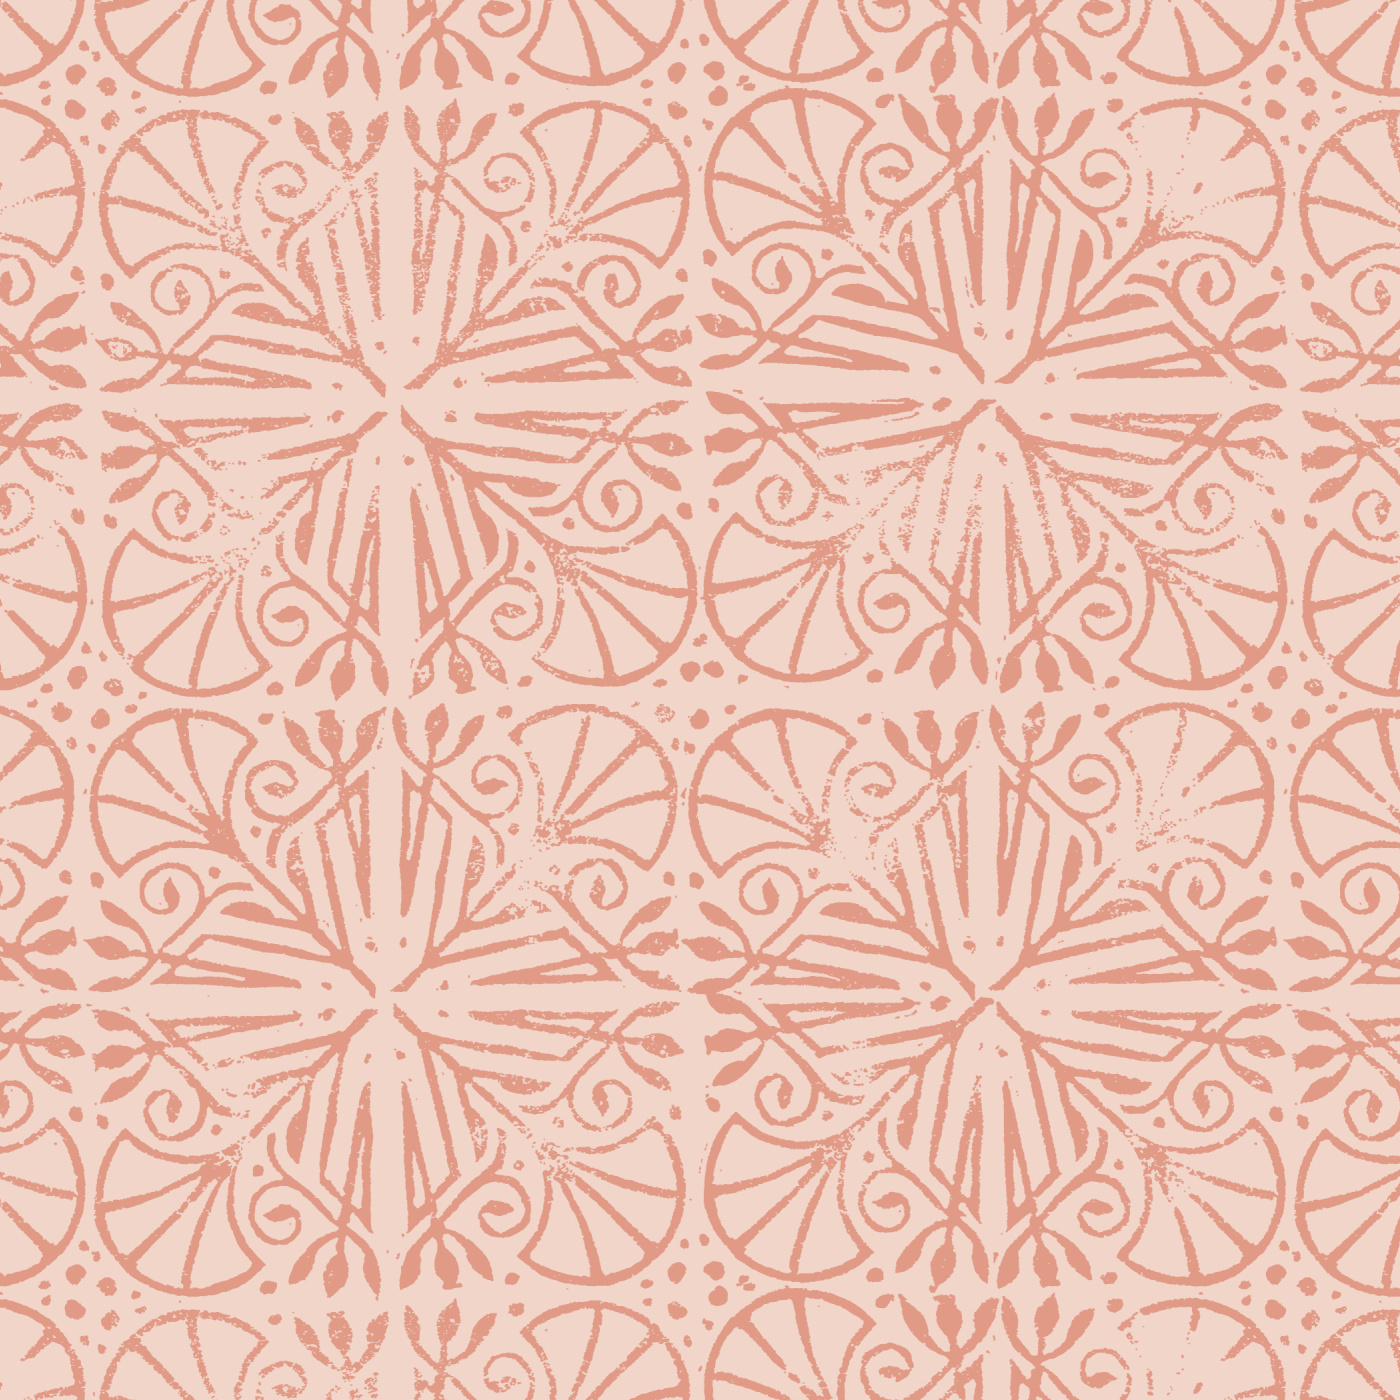 Stamped Tiles Wallpaper